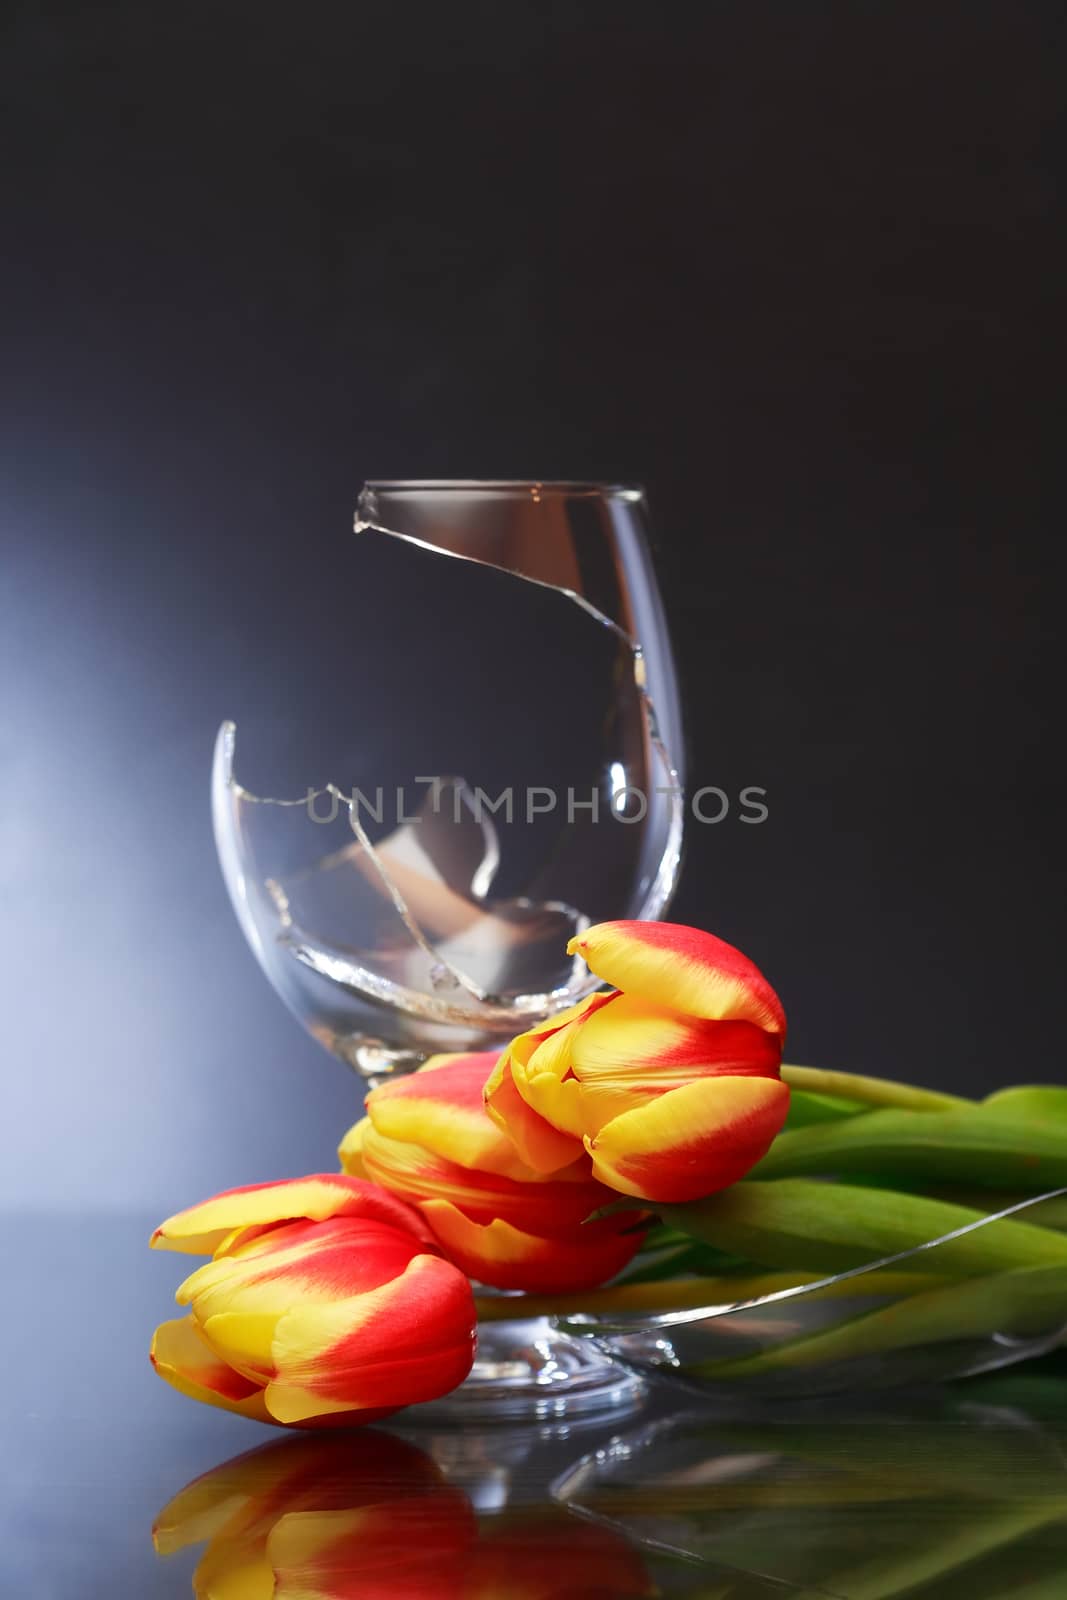 Broken Wineglass And Flowers by kvkirillov